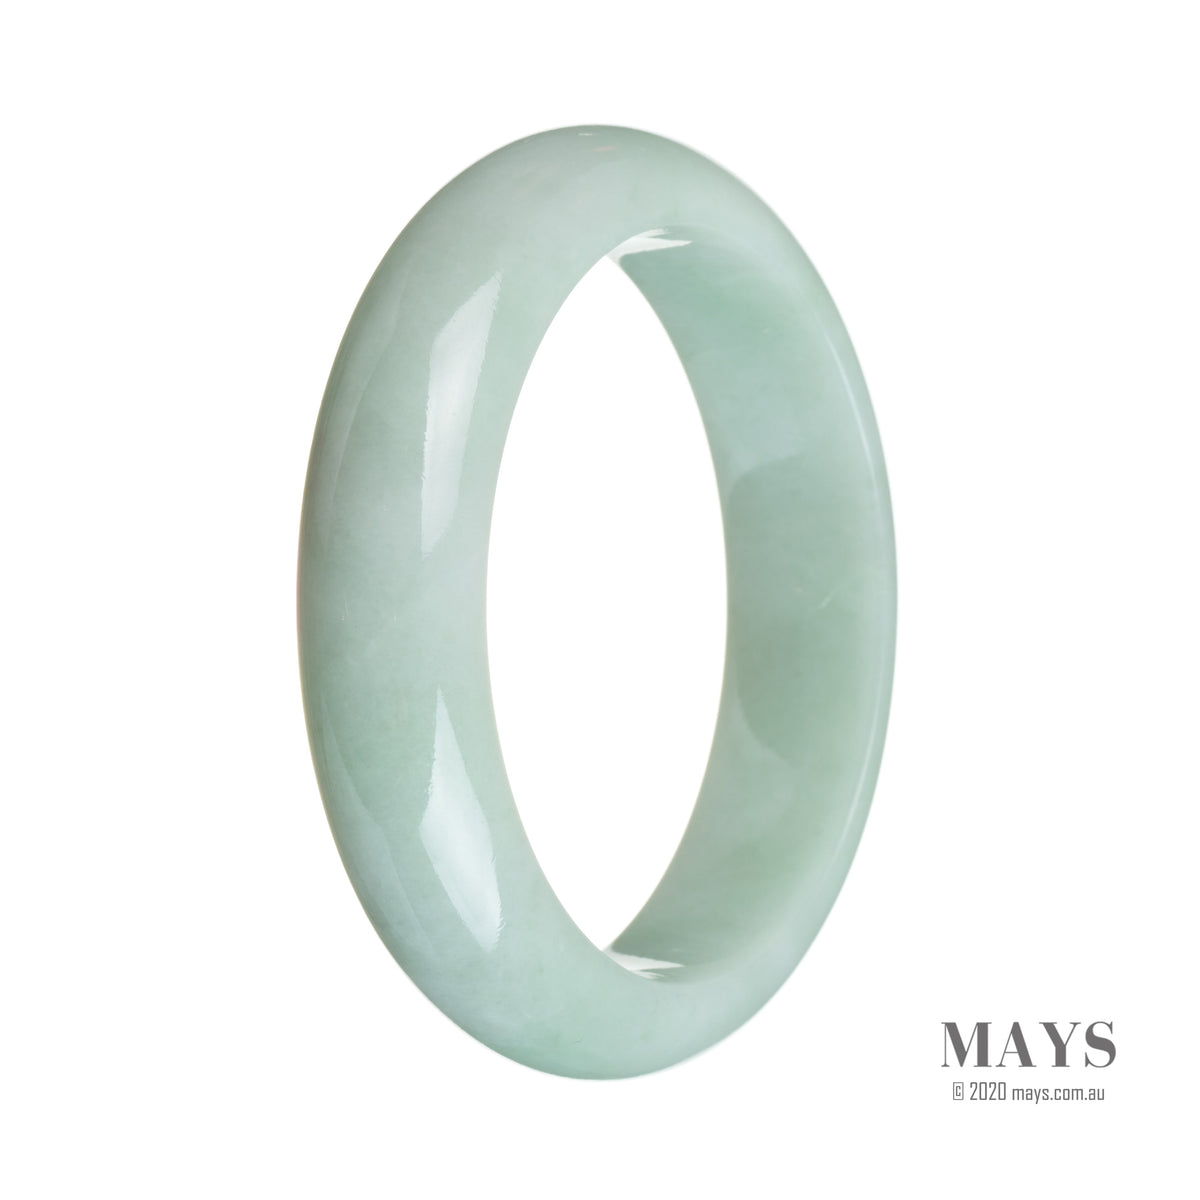 A light green Burmese Jade bangle bracelet with a semi-round shape, measuring 62mm.